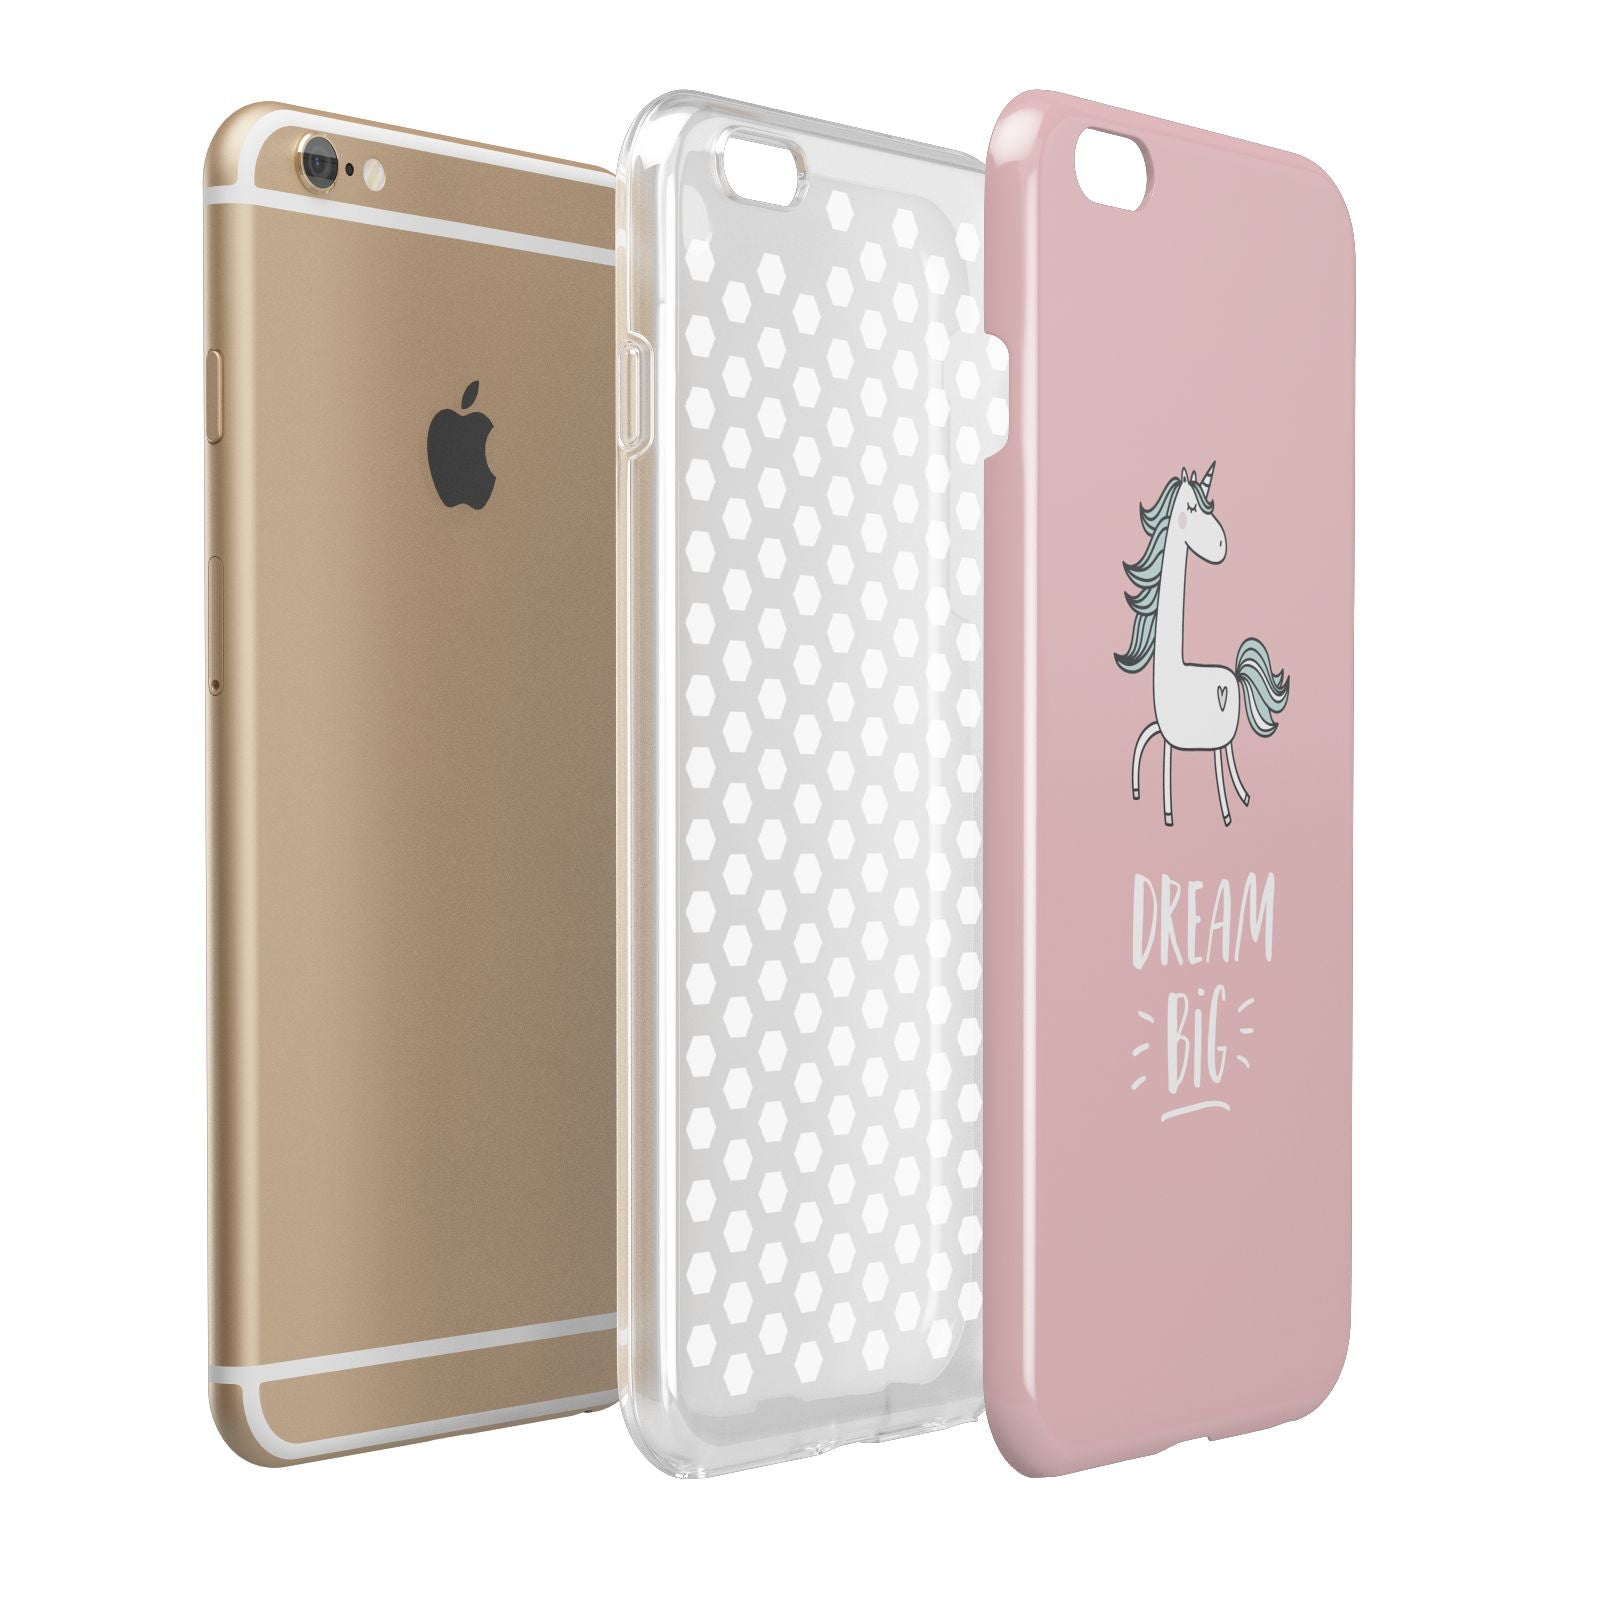 Unicorn Print Dream Big Apple iPhone 6 Plus 3D Tough Case